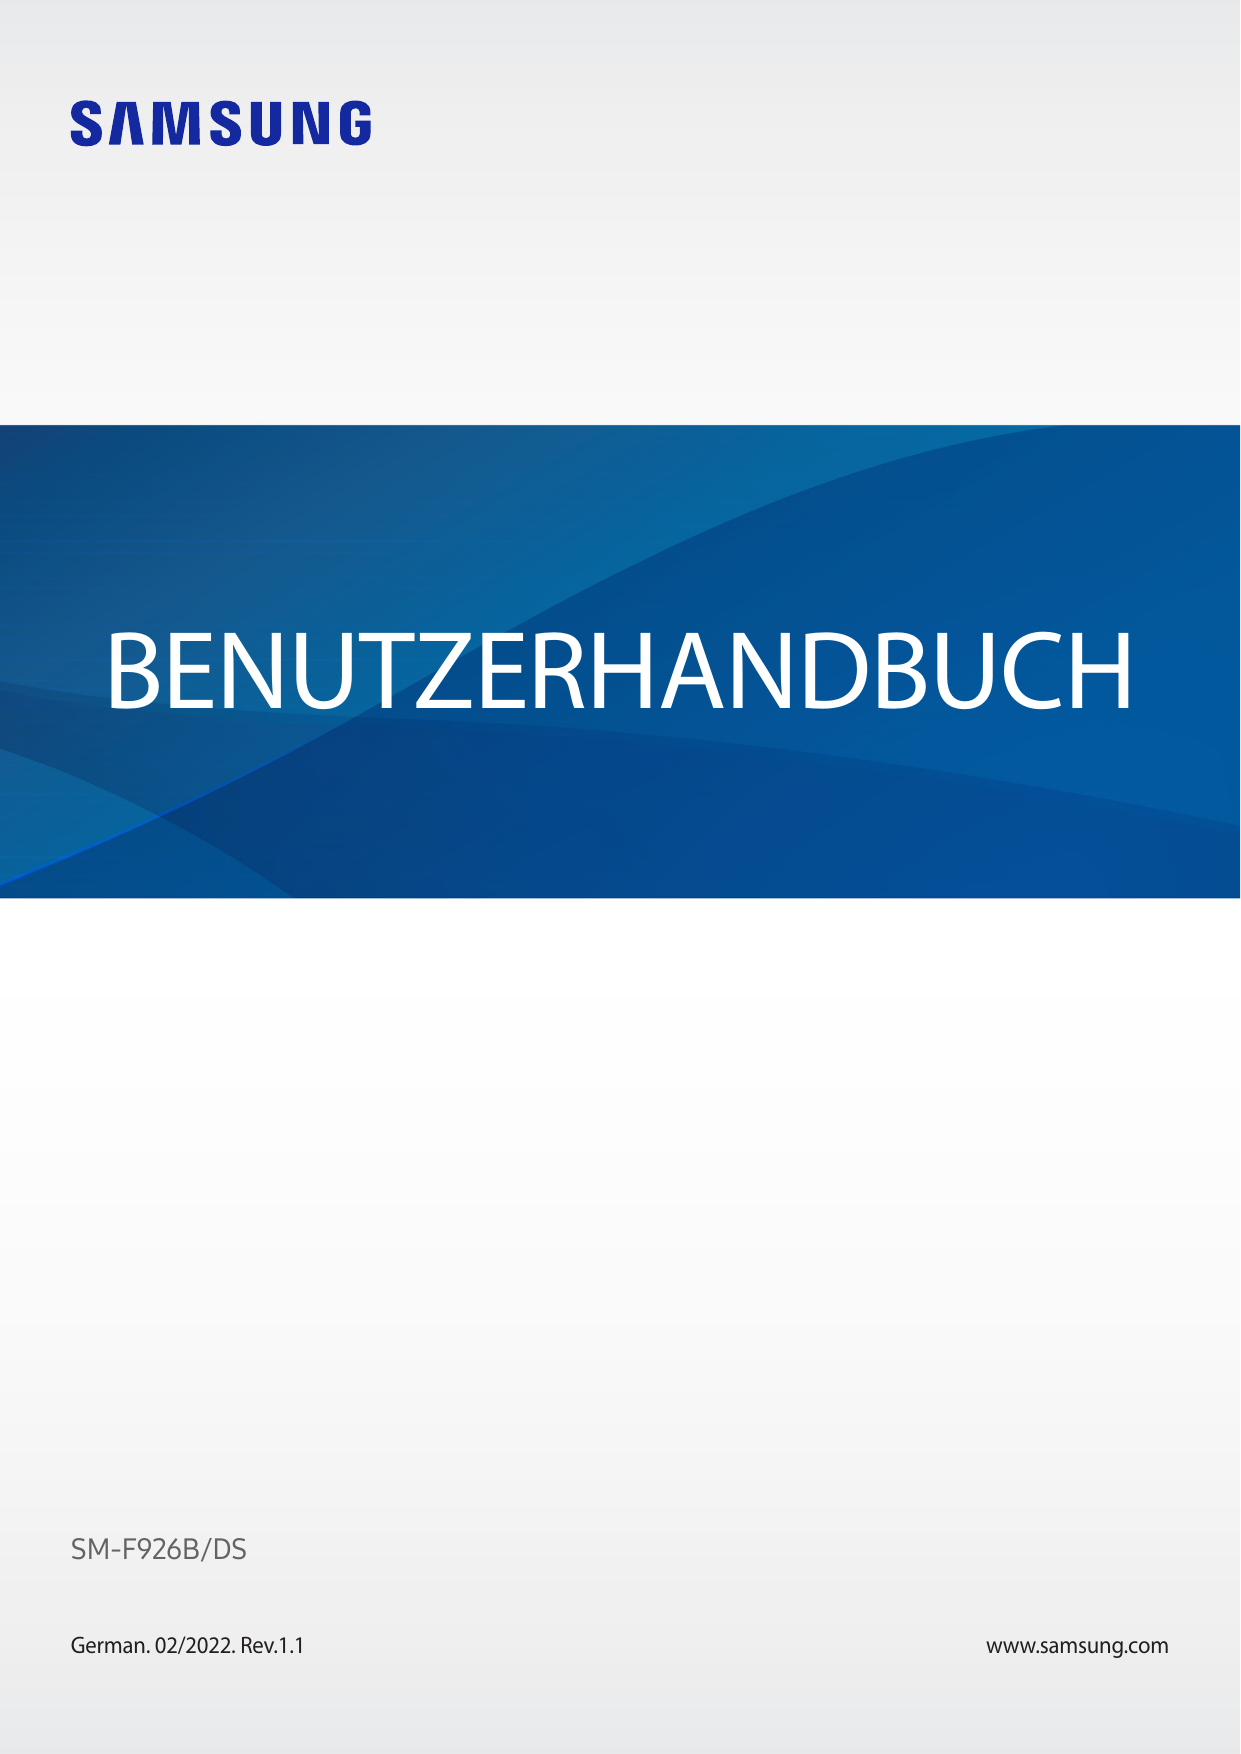 BENUTZERHANDBUCHSM-F926B/DSGerman. 02/2022. Rev.1.1www.samsung.com